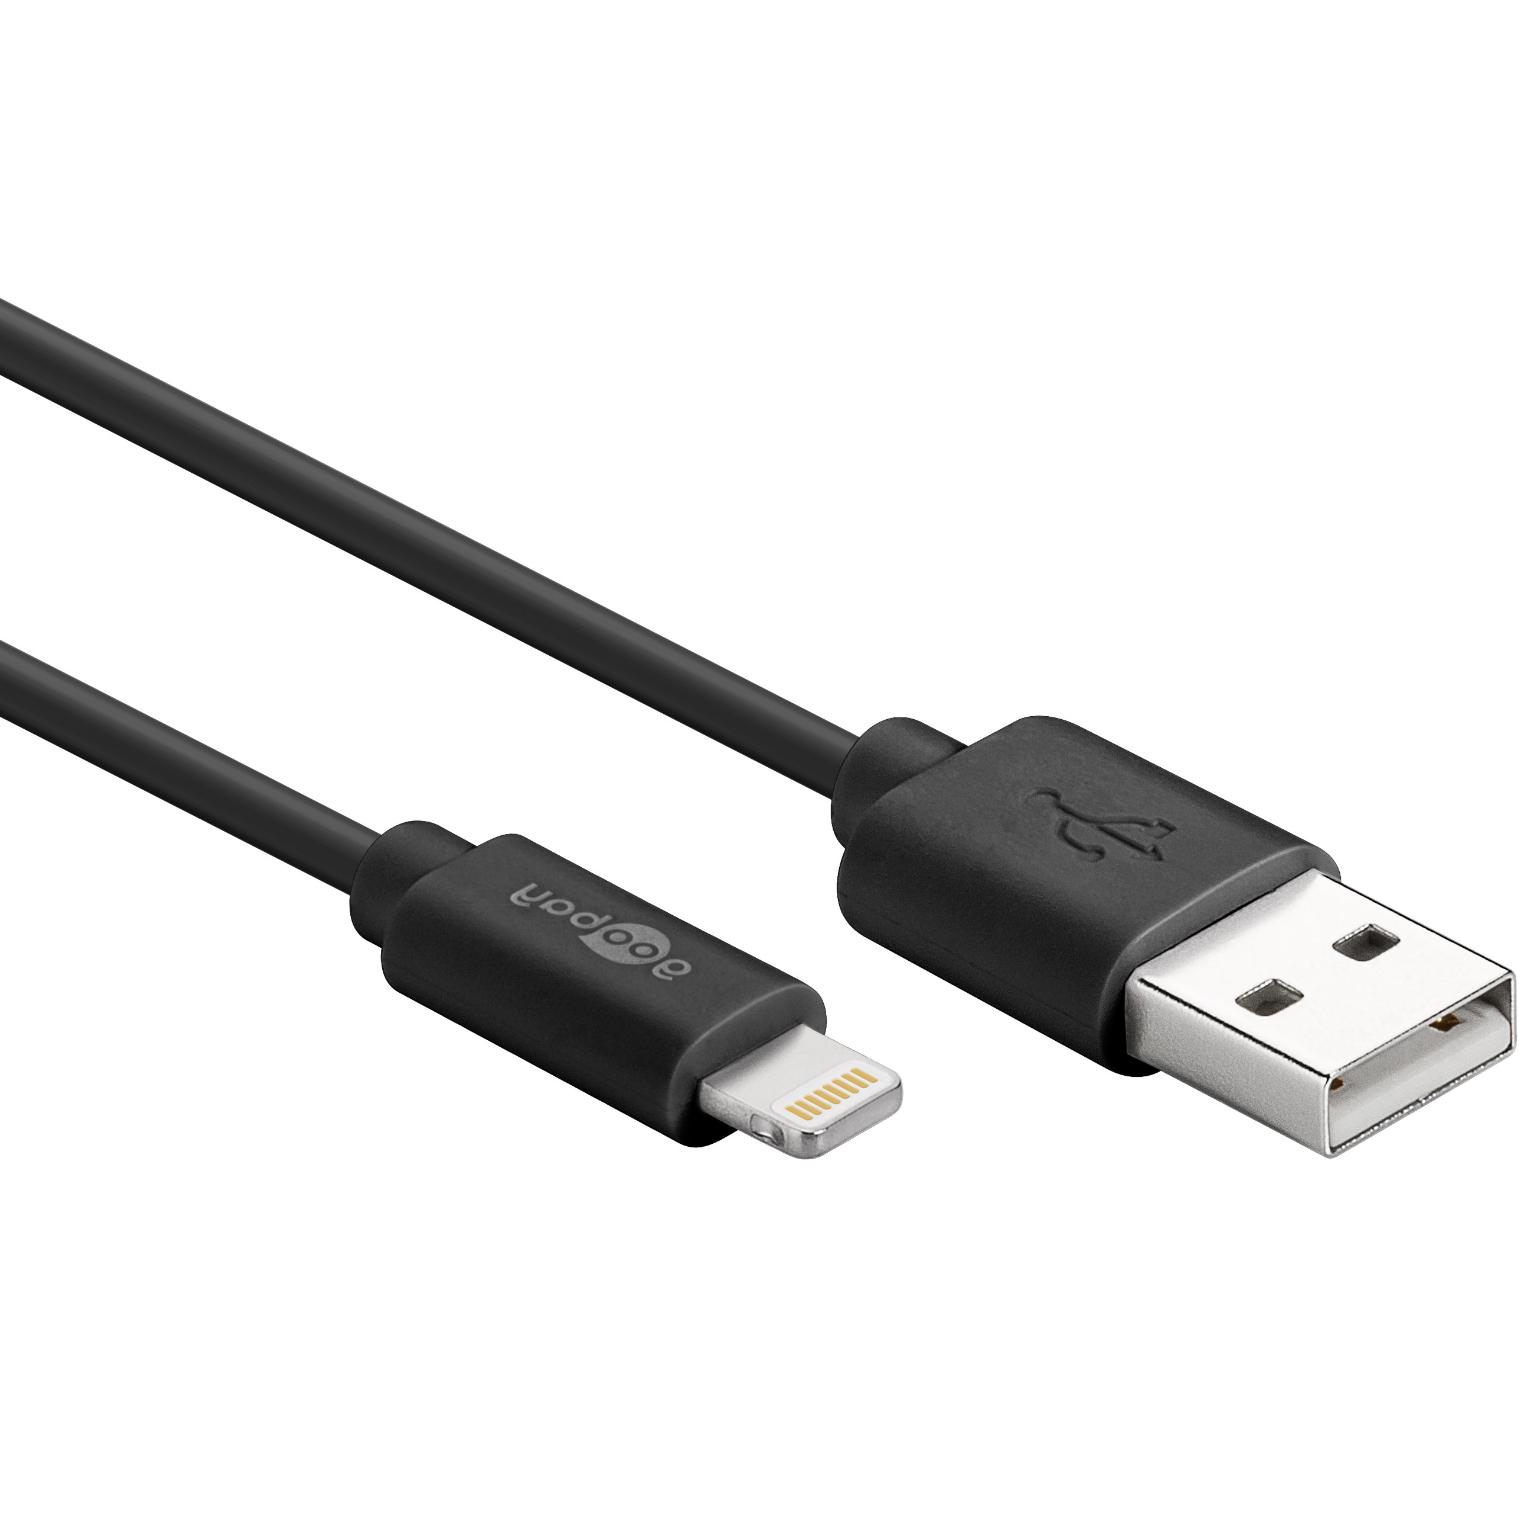 USB Kabel für iPad Pro - Goobay